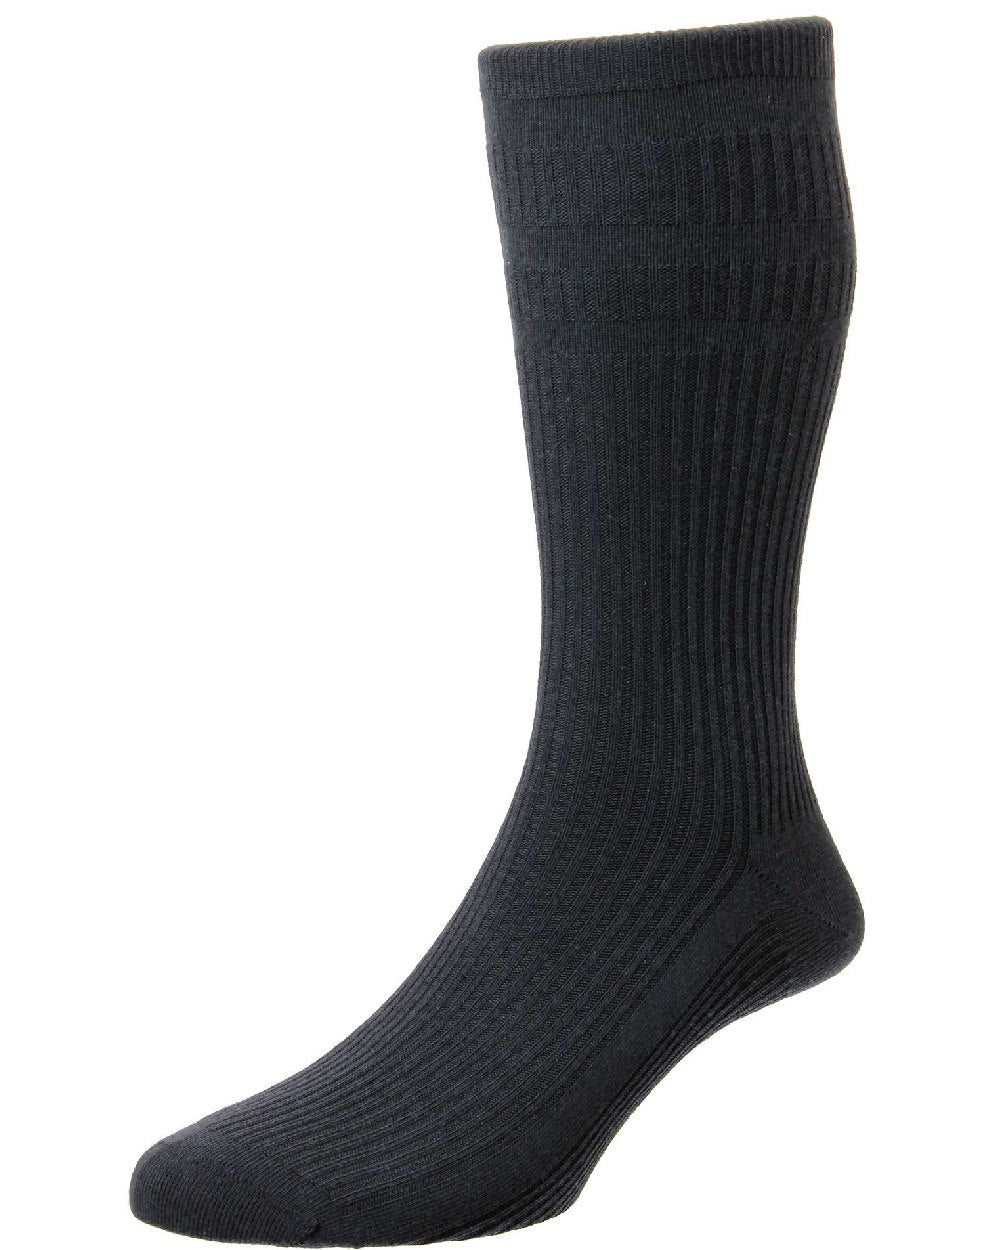 HJ Hall Original Cotton Soft Top Socks in Charcoal 